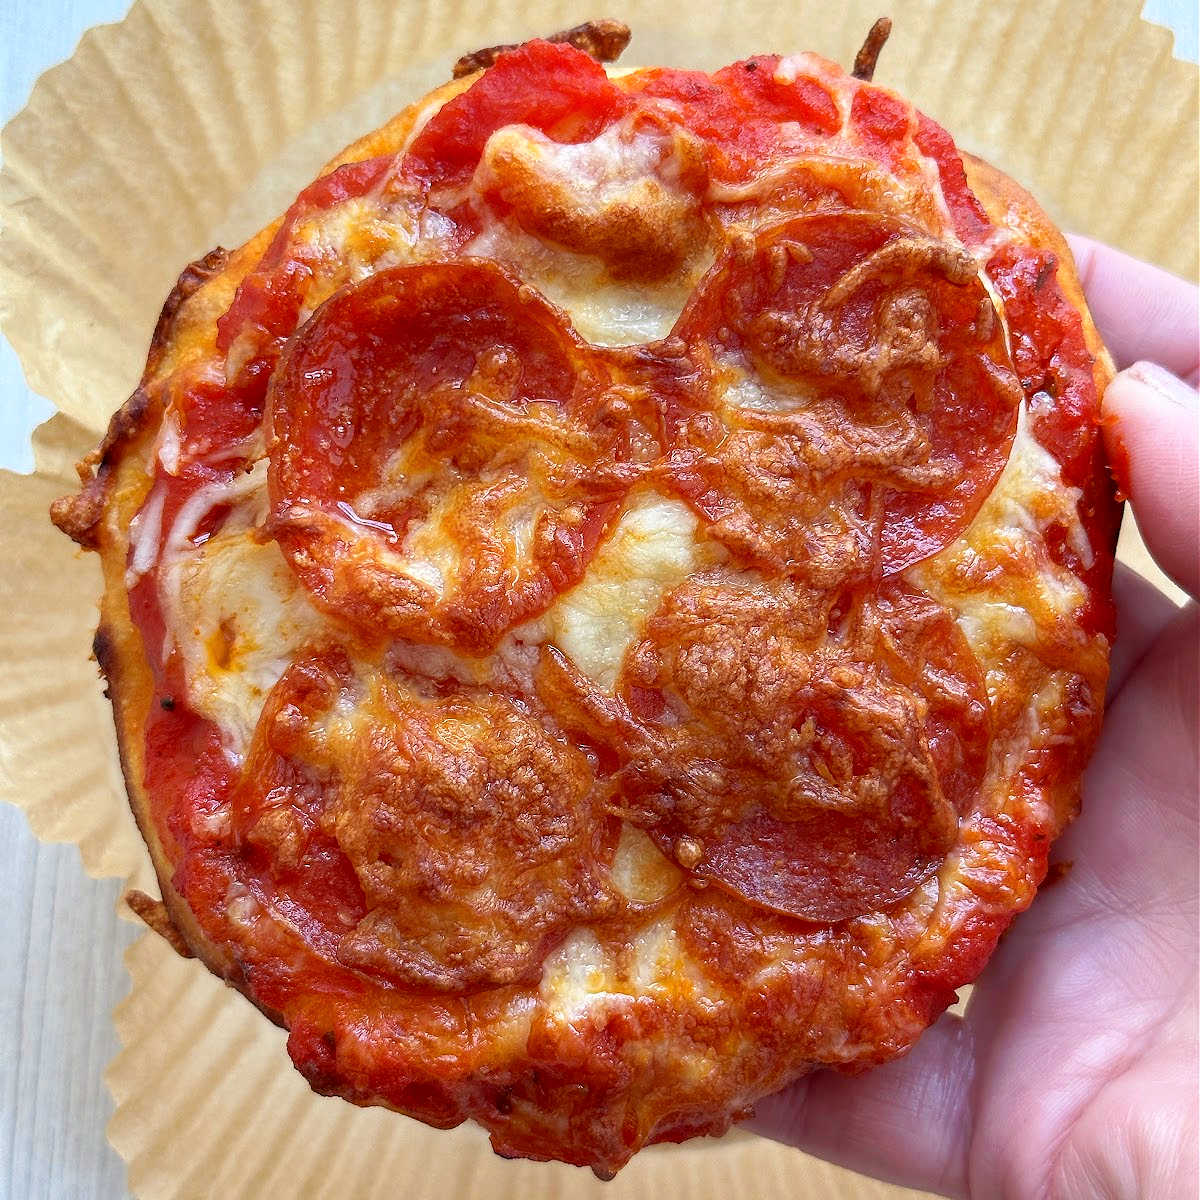 https://www.foodtasticmom.com/wp-content/uploads/2018/08/pizza-af-feature2.jpg